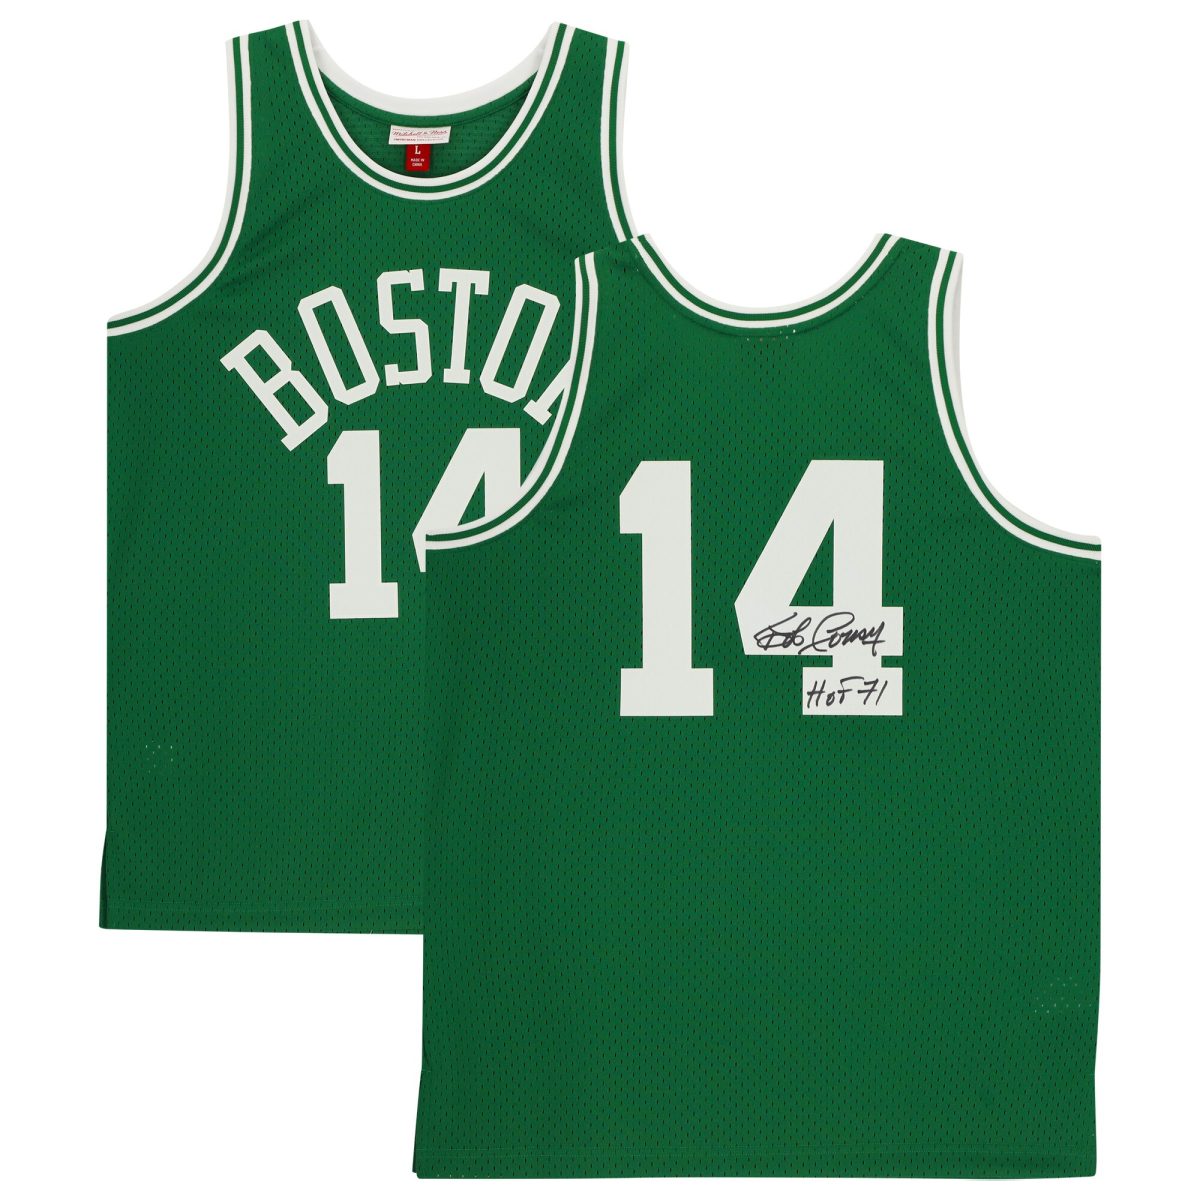 Bob Cousy Green Boston Celtics Autographed Mitchell & Ness Swingman Jersey with "HOF 71" Inscription